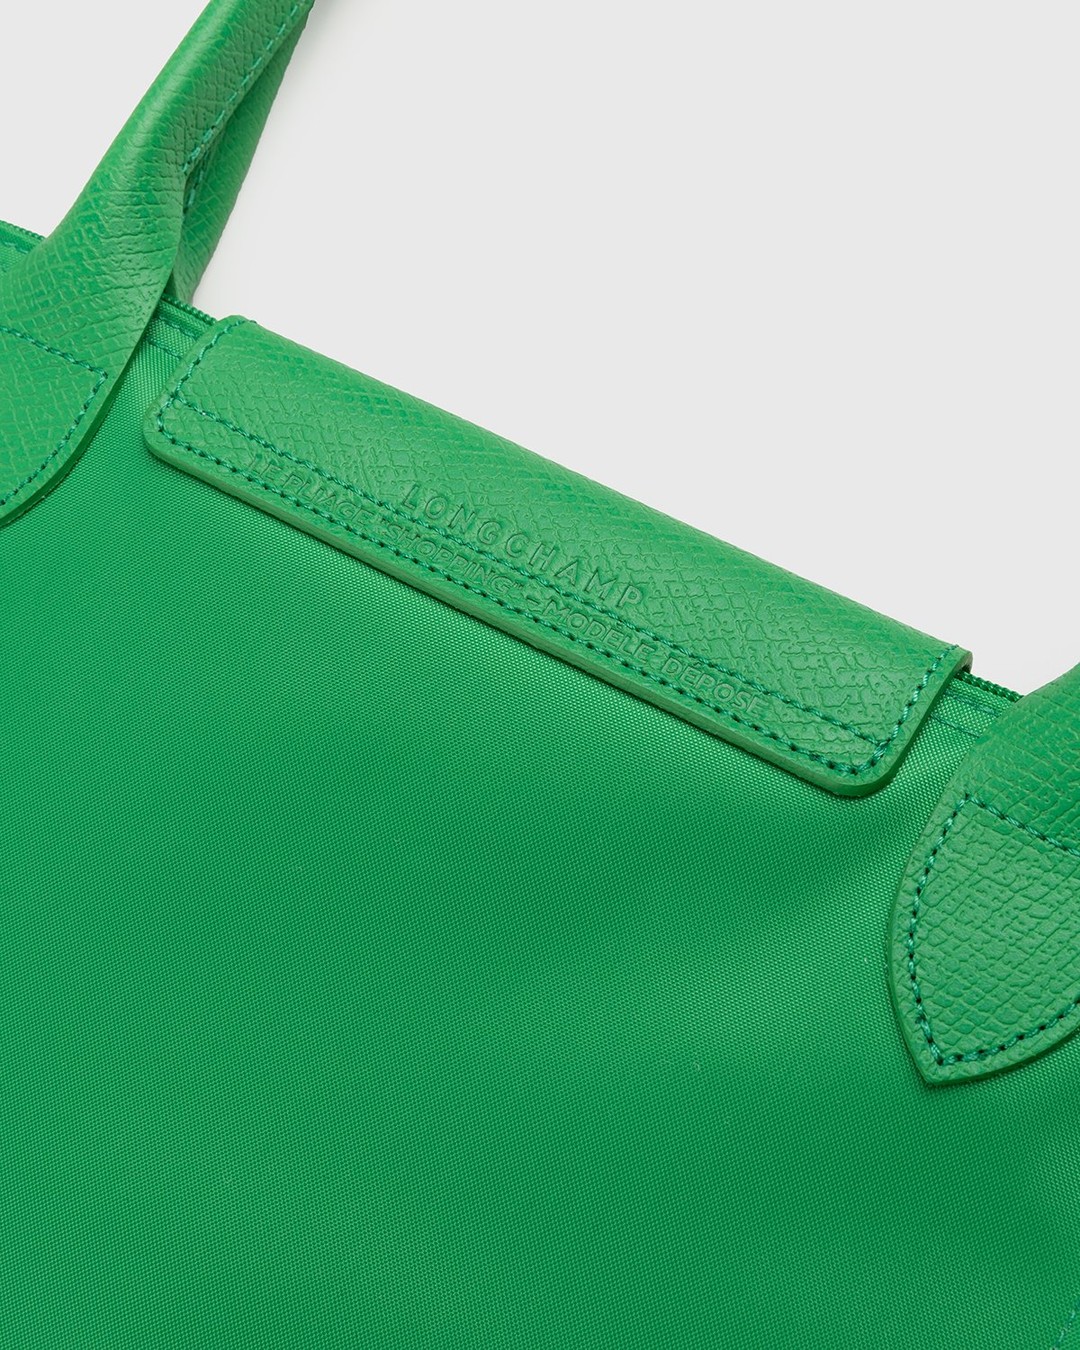 André Saraiva's Cheeky Longchamp Le Pliage Bags